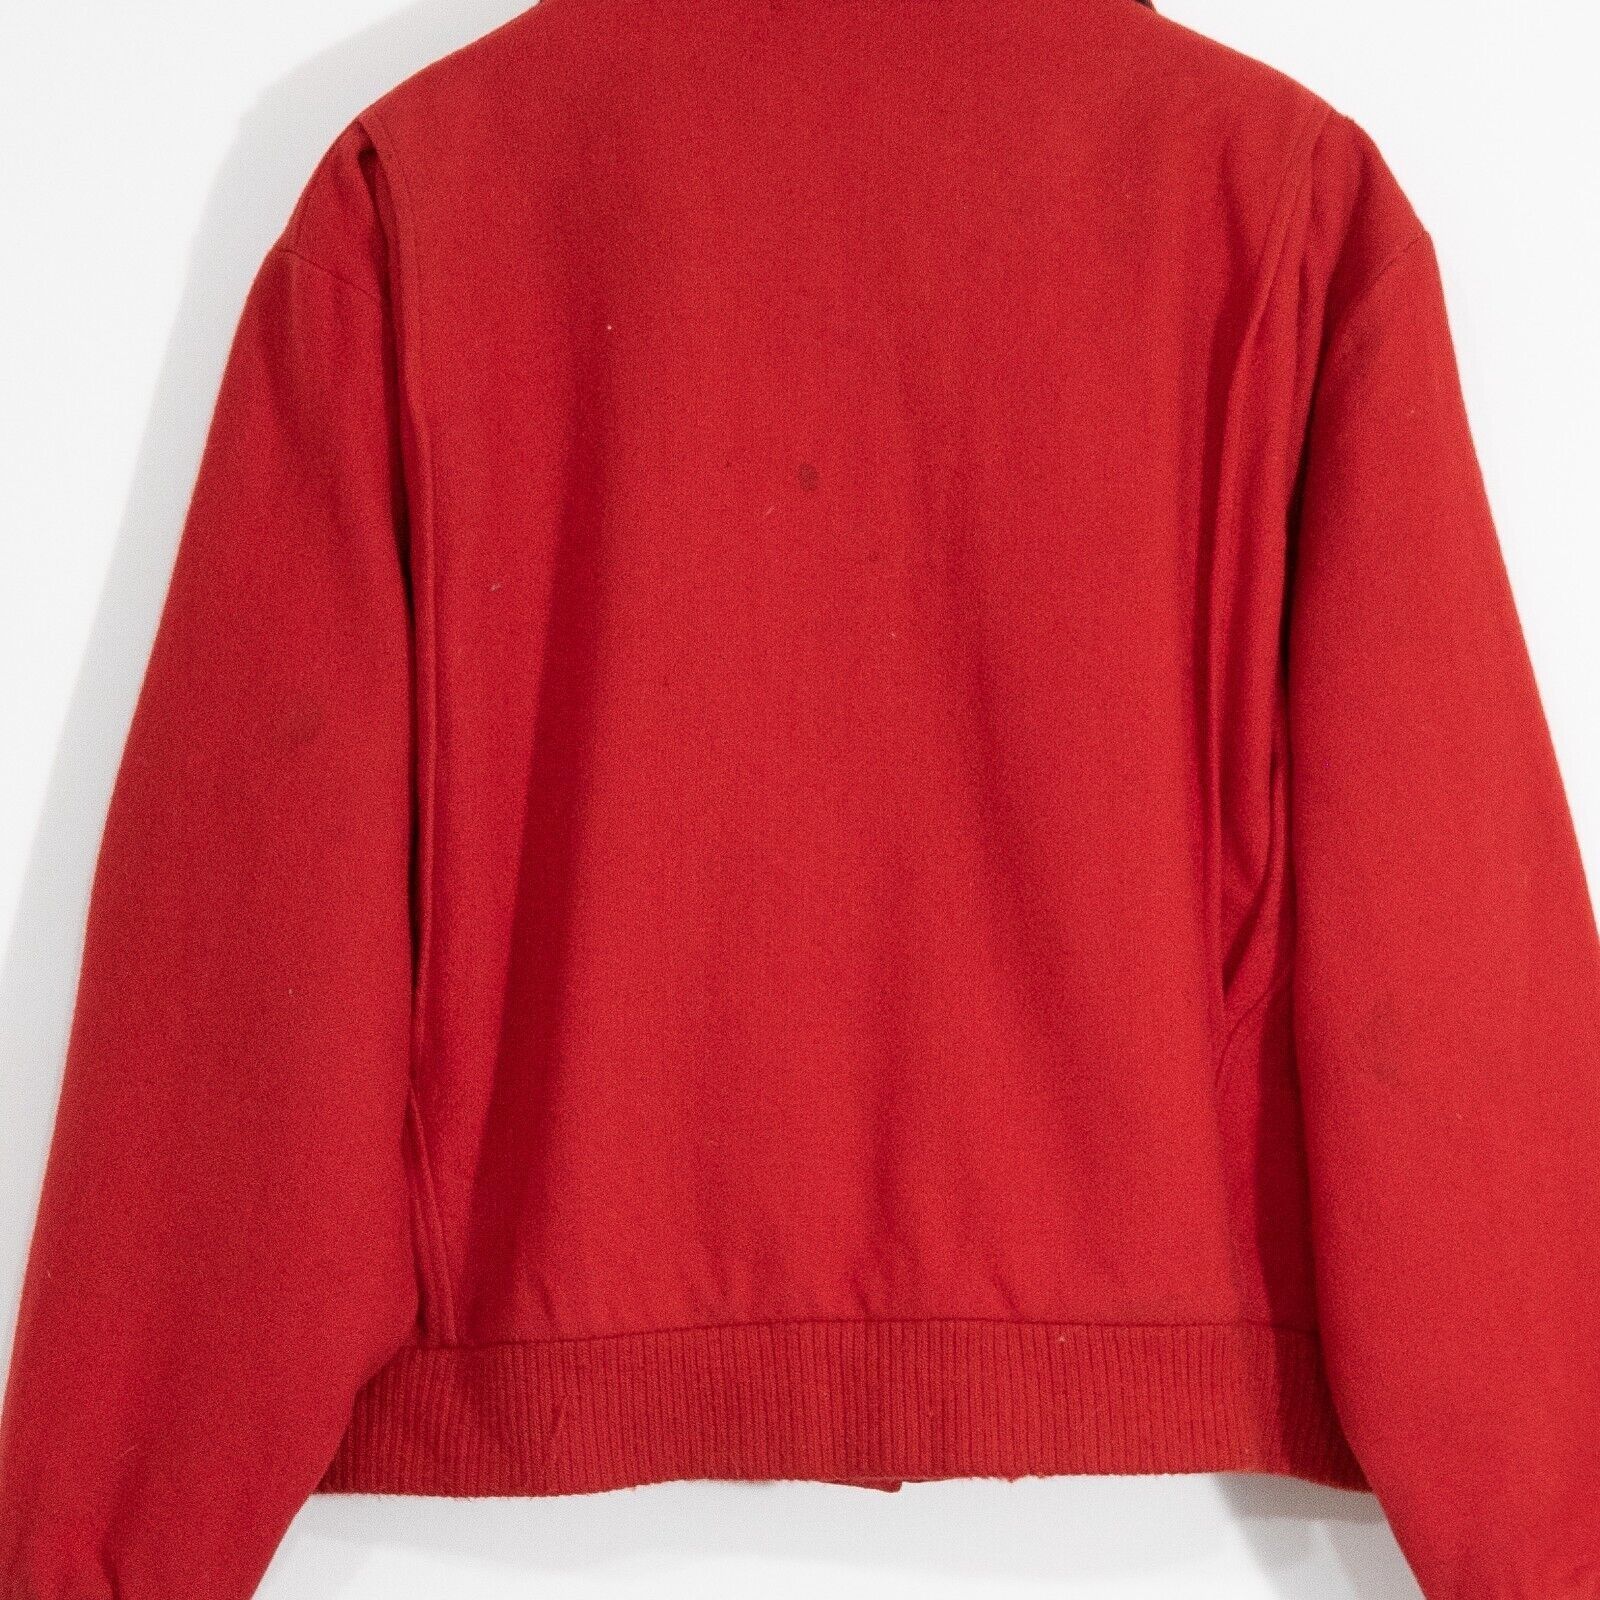 Vintage Vintage 80s Woolrich Bomber Jacket Mens XL Red Wool Flannel Size US XL / EU 56 / 4 - 7 Thumbnail